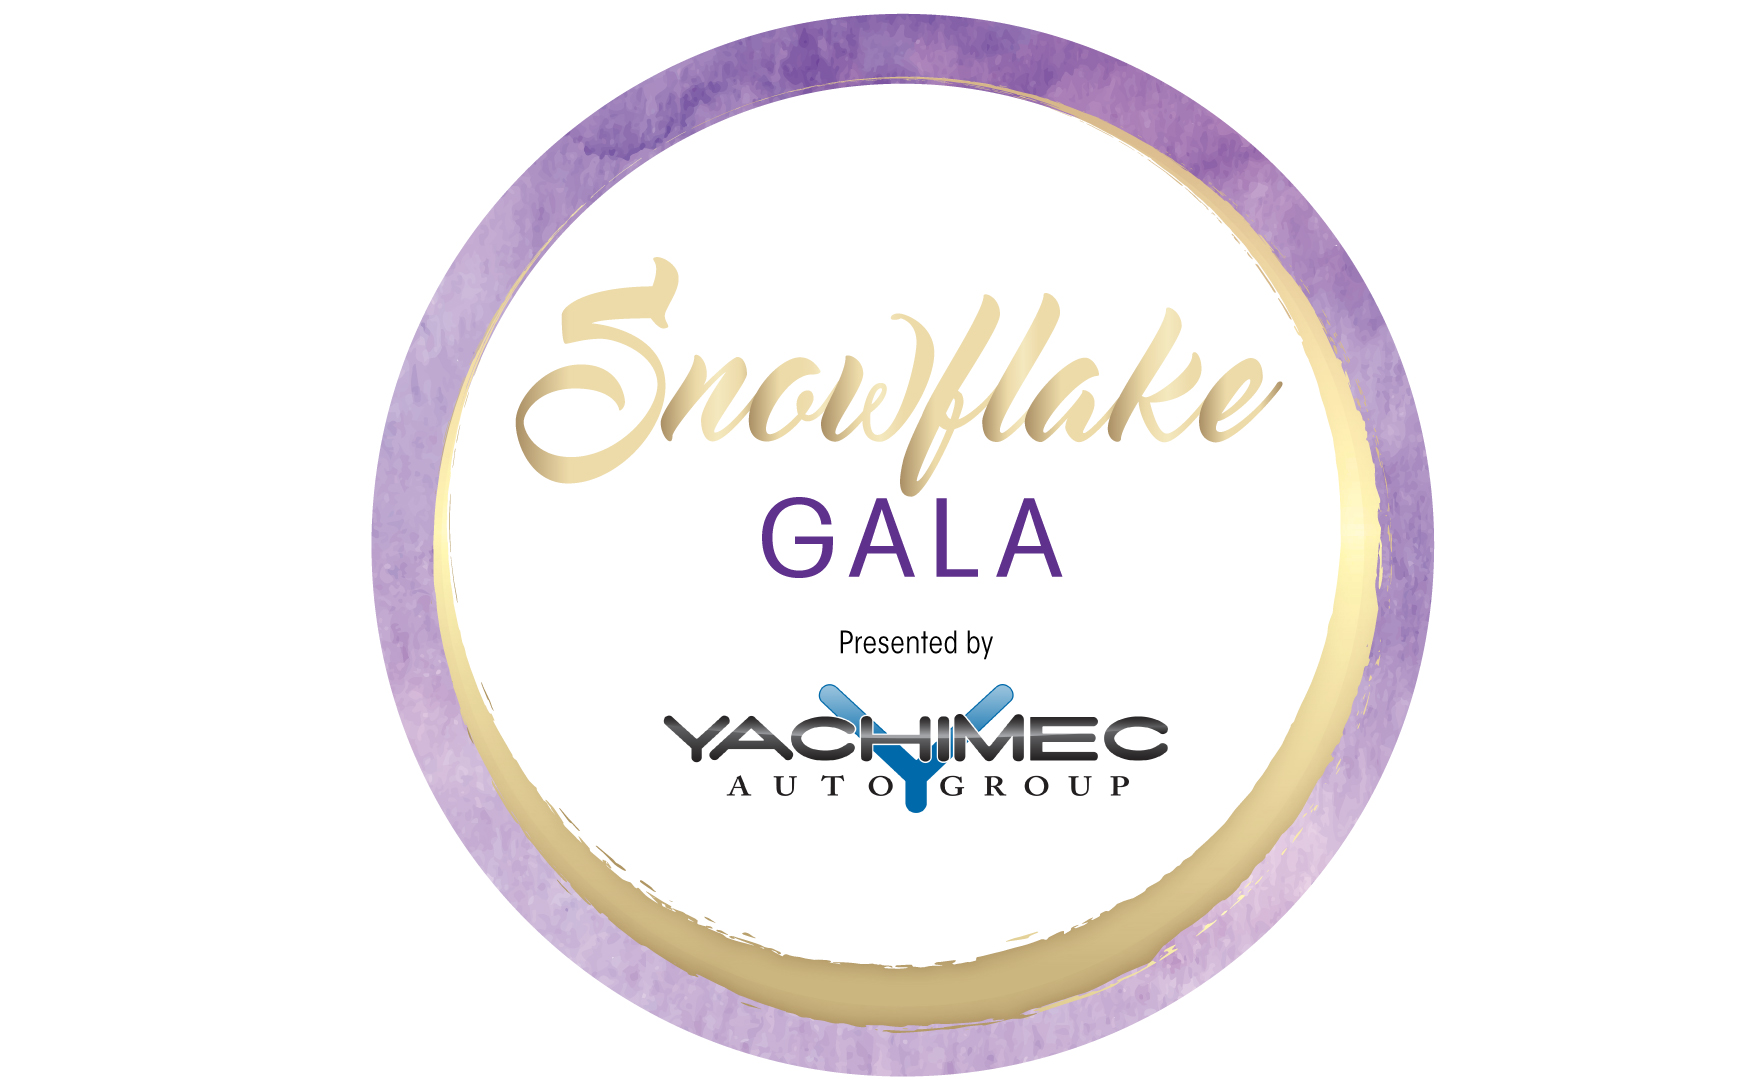 snowflake gala presenting logo